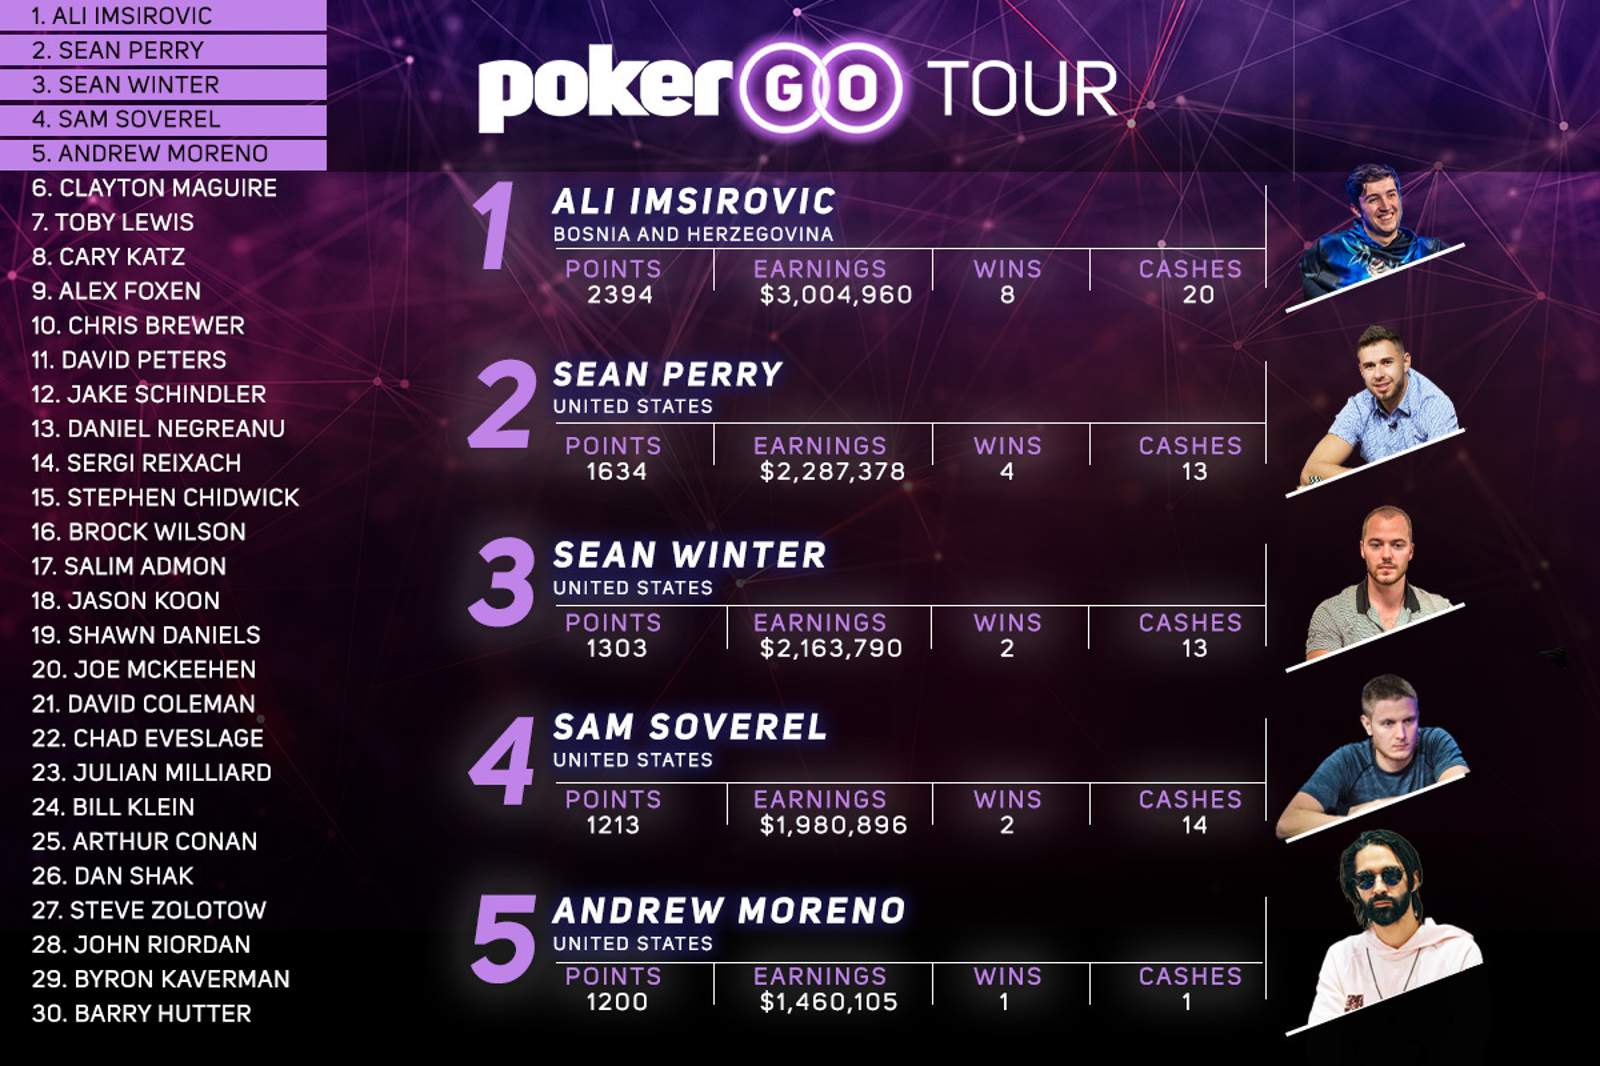 Ali Imsirovic Extends Lead on Top of PokerGO Tour Leaderboard